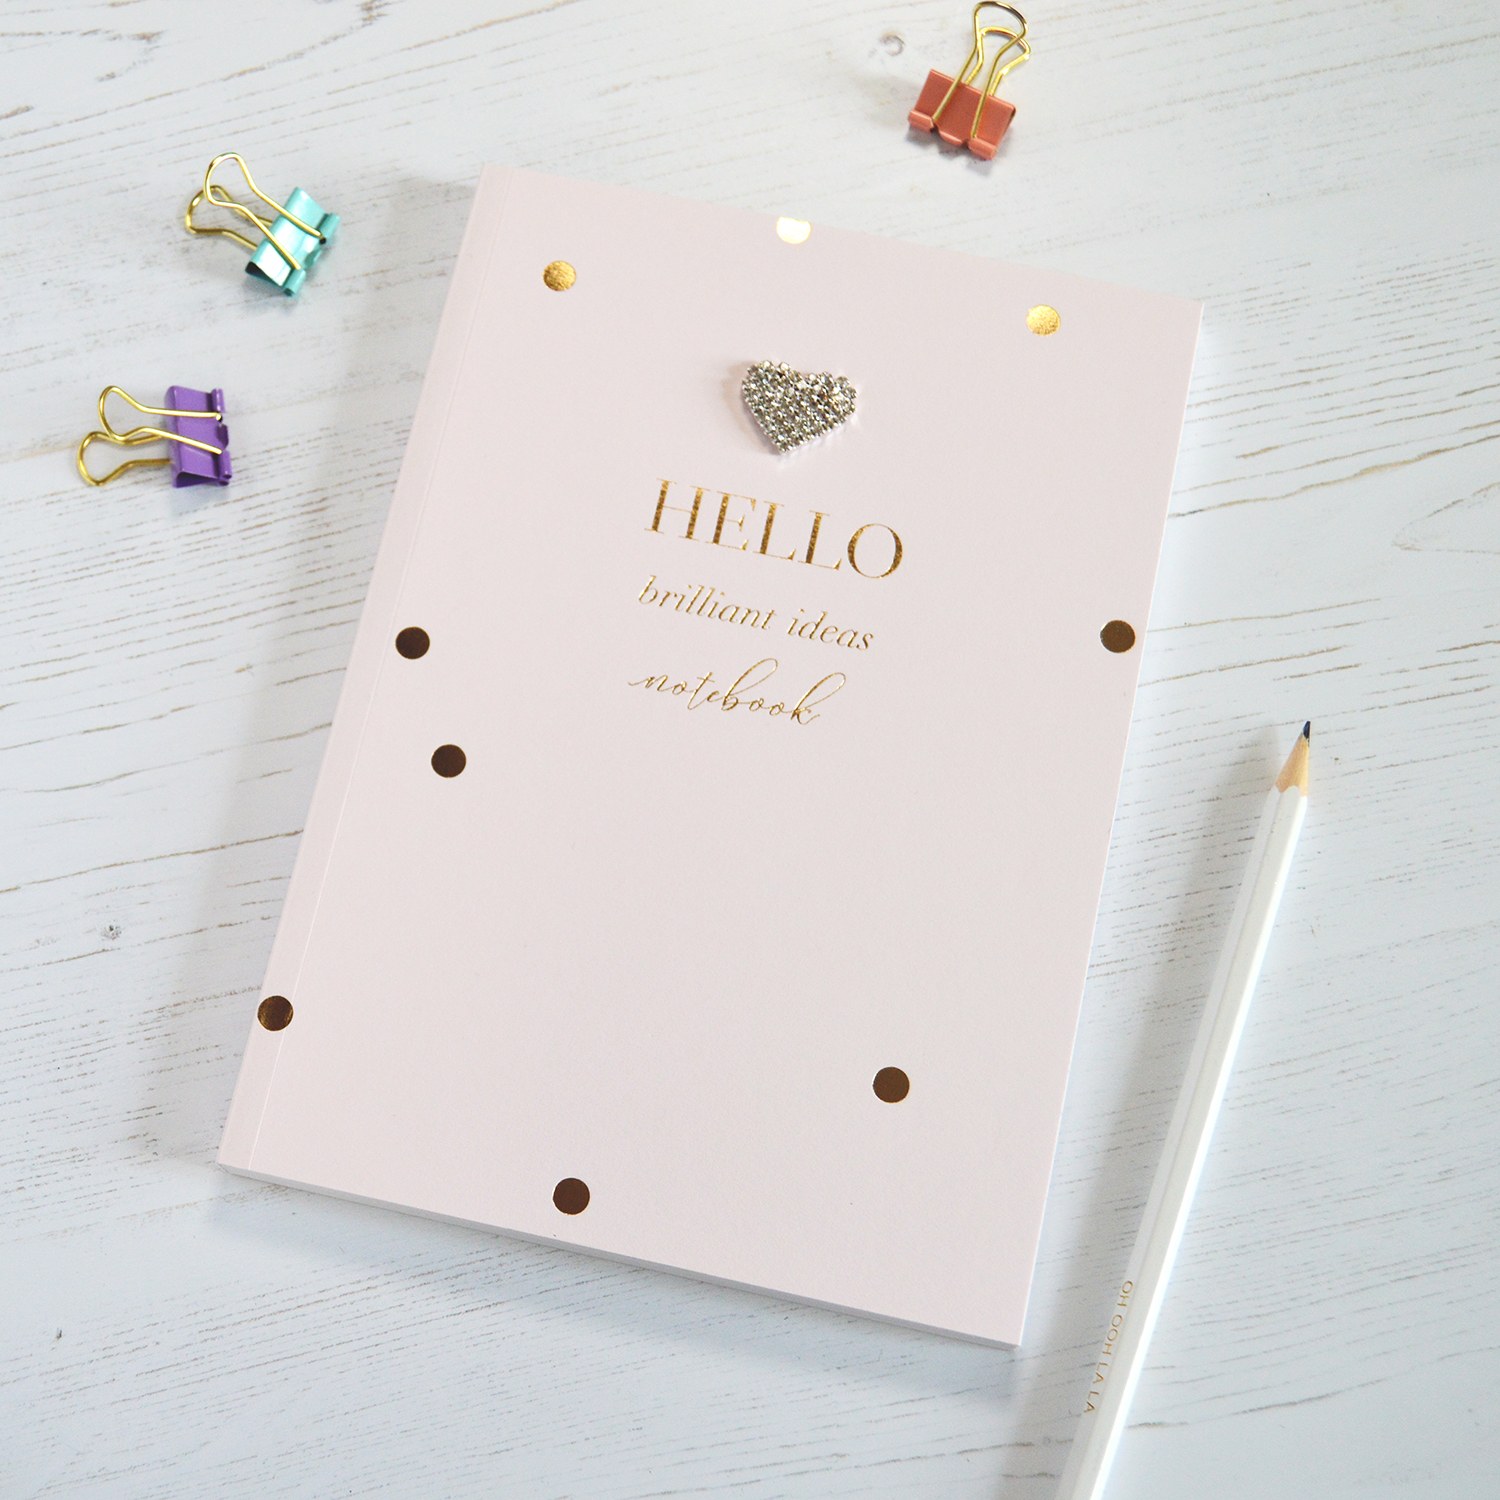 Hello brilliant ideas notebook